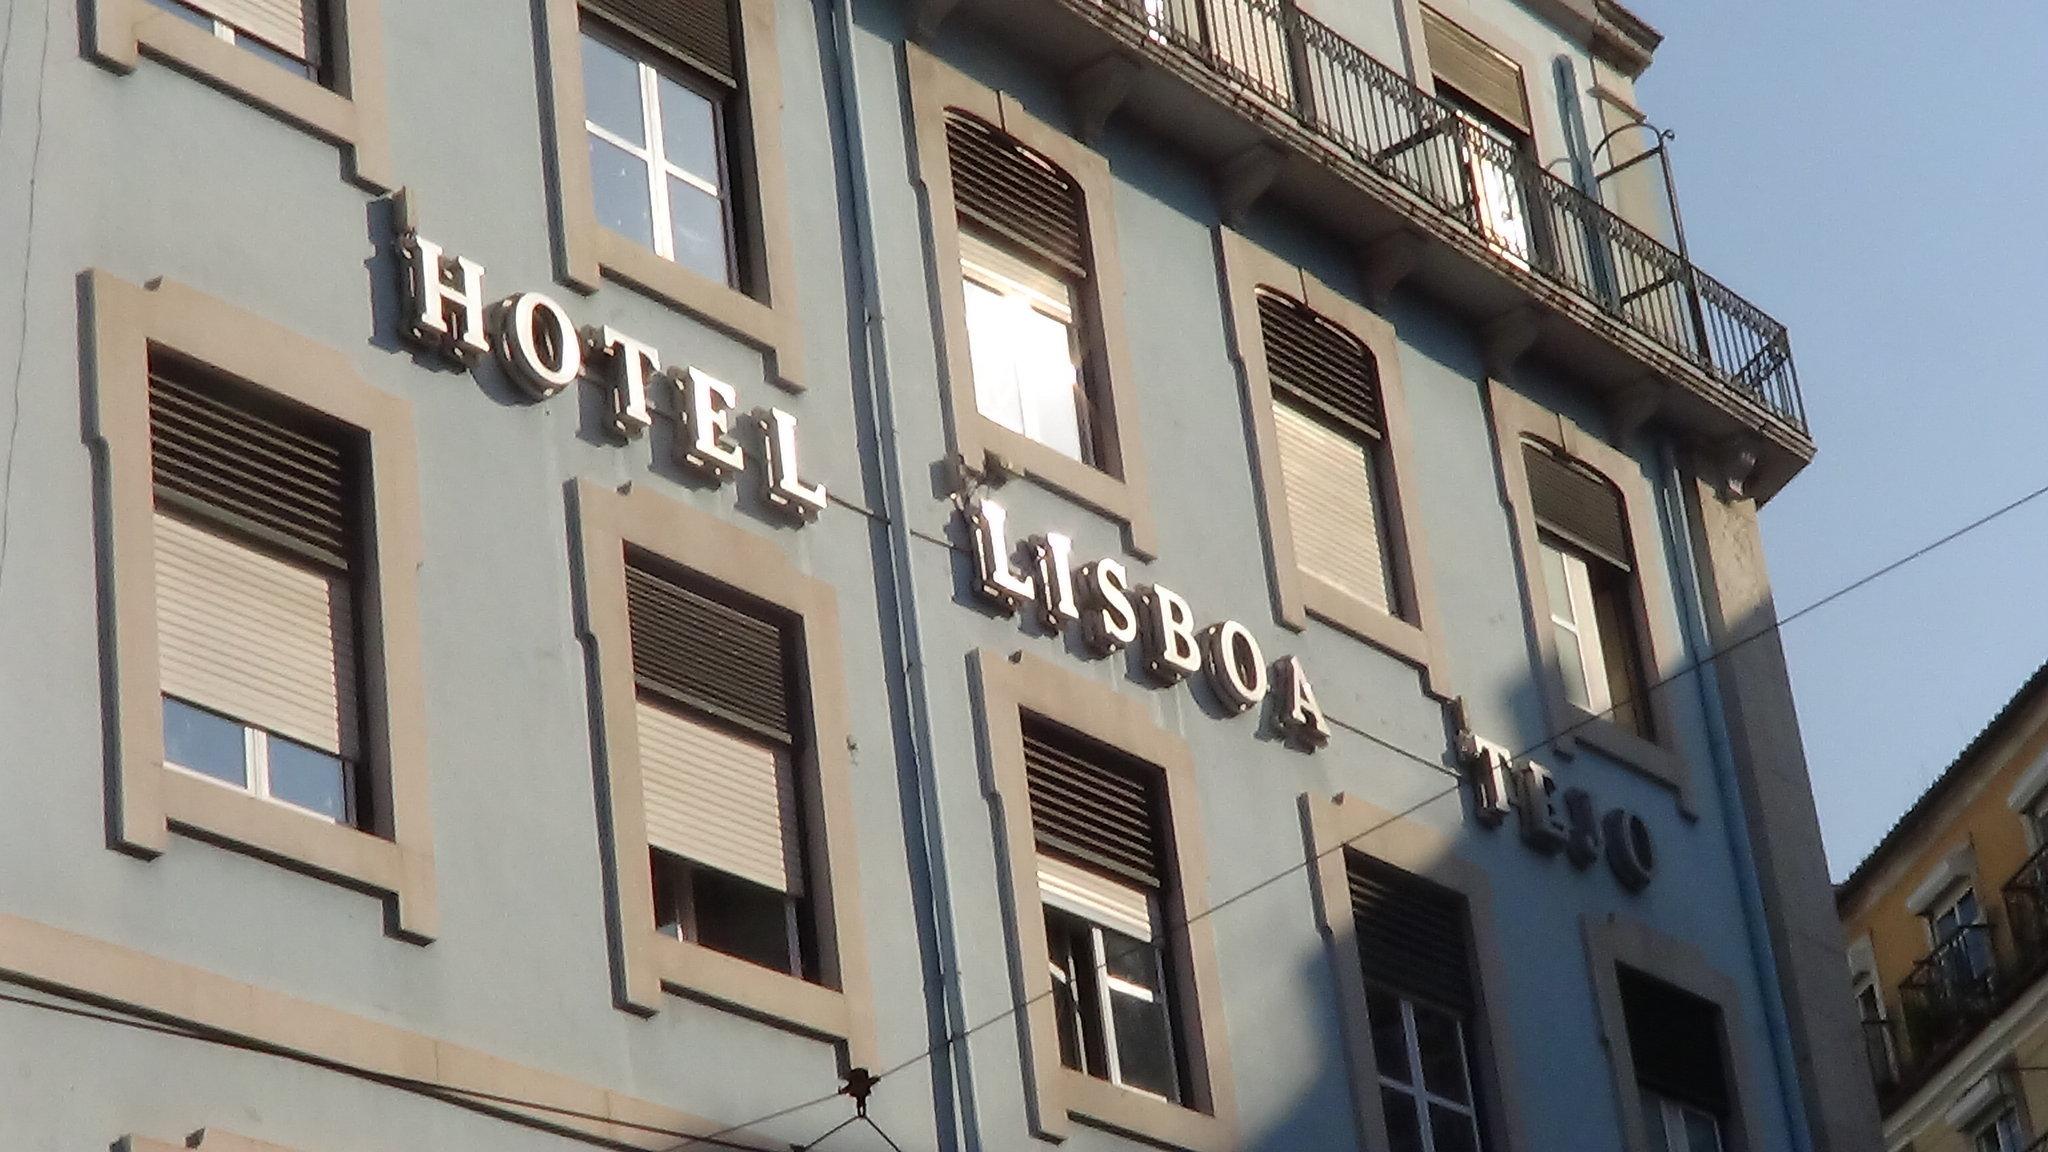 MY STORY HOTEL TEJO in LISBOA, Portugal